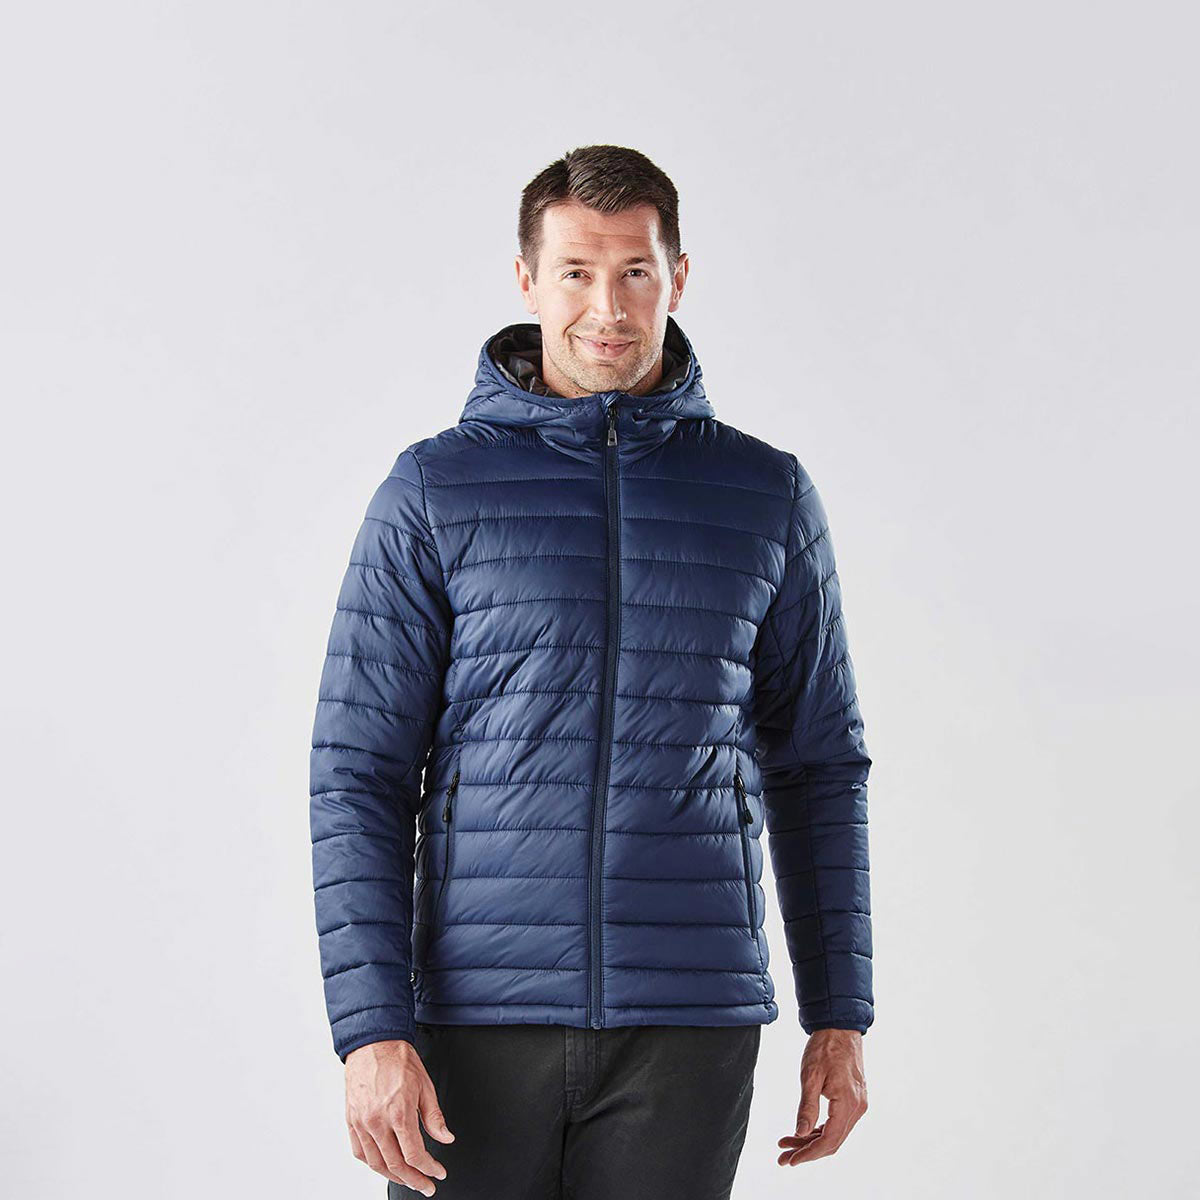 Buy Men's Packable Down Jacket, Puffer Jacket Lightweight Warm Puffer Coat,  Stand Collar- Dark Navy, Medium at